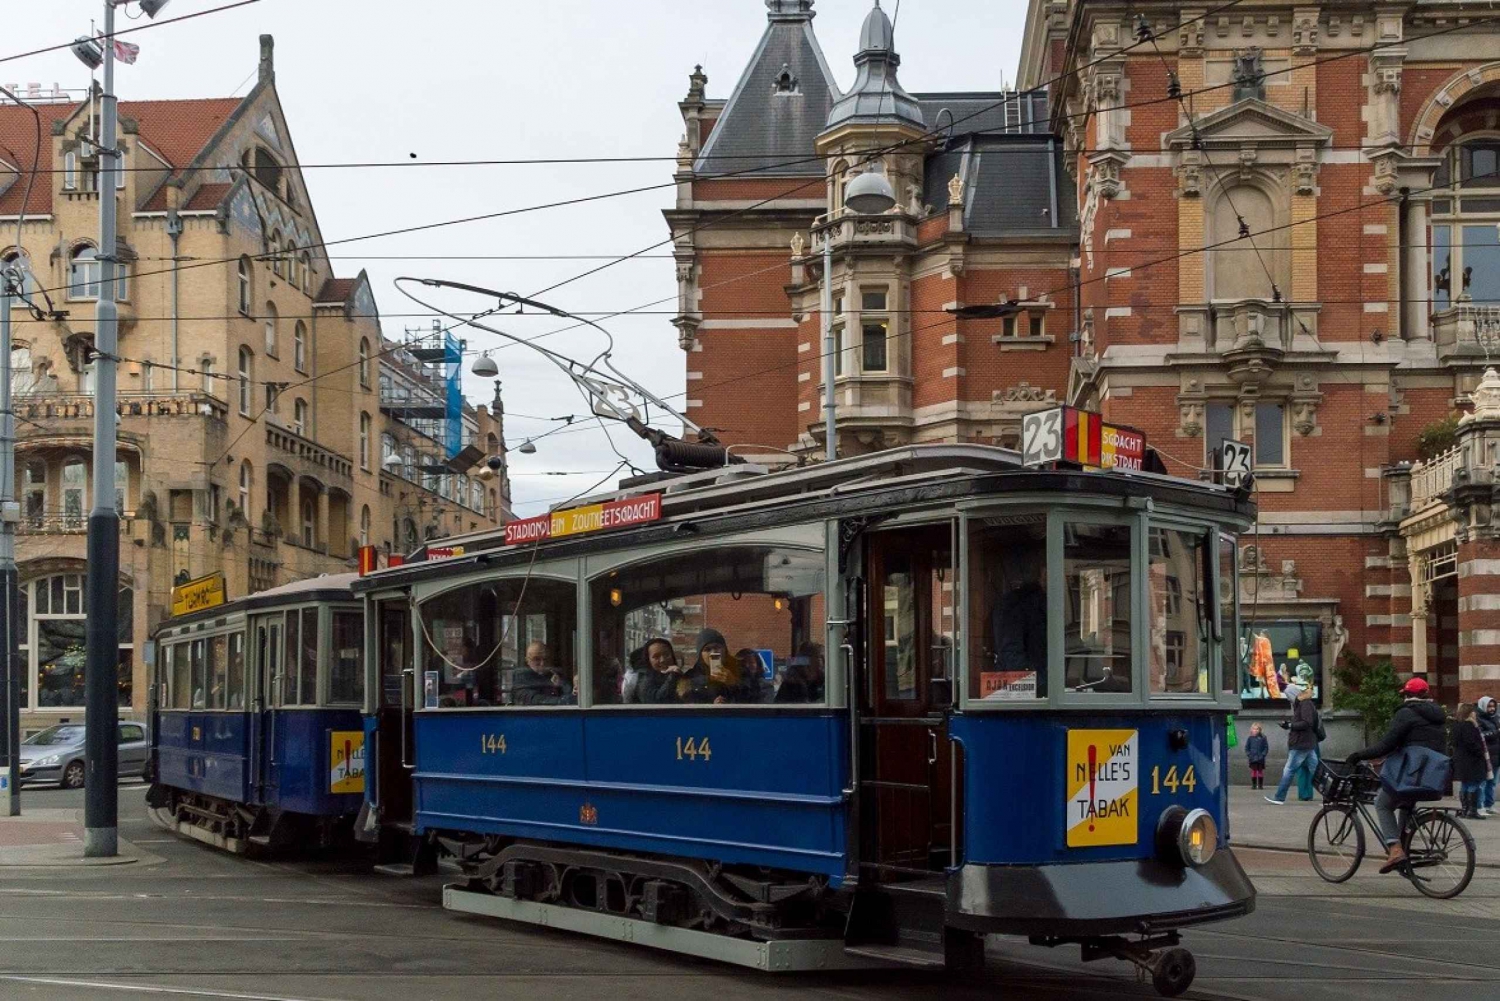 Amsterdam: Historic Tram Ride